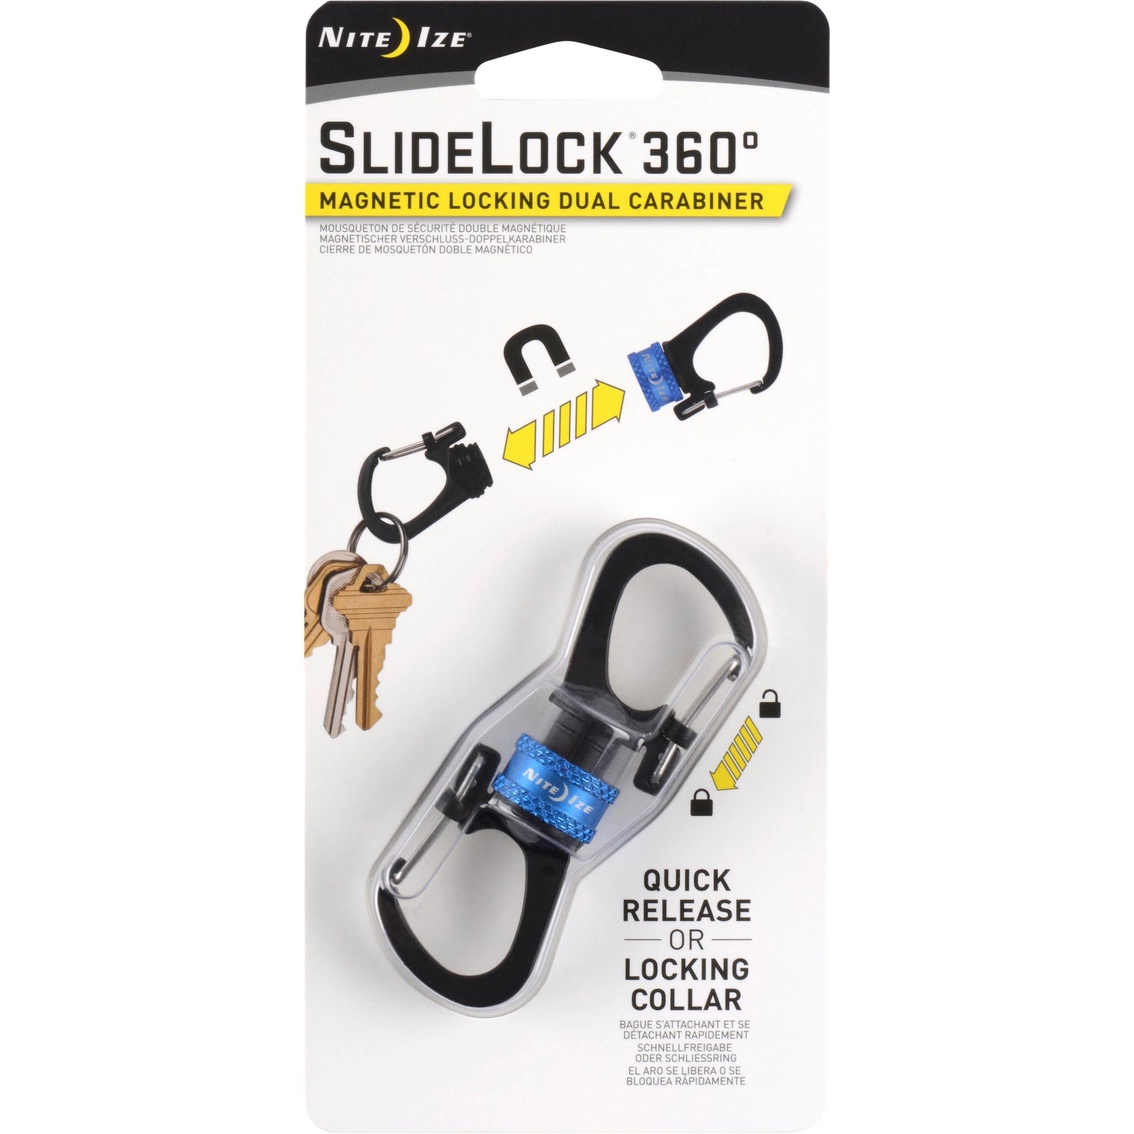 Slidelock 360 Degree Magnetic Locking Dual Carabiner - Image 3 of 4